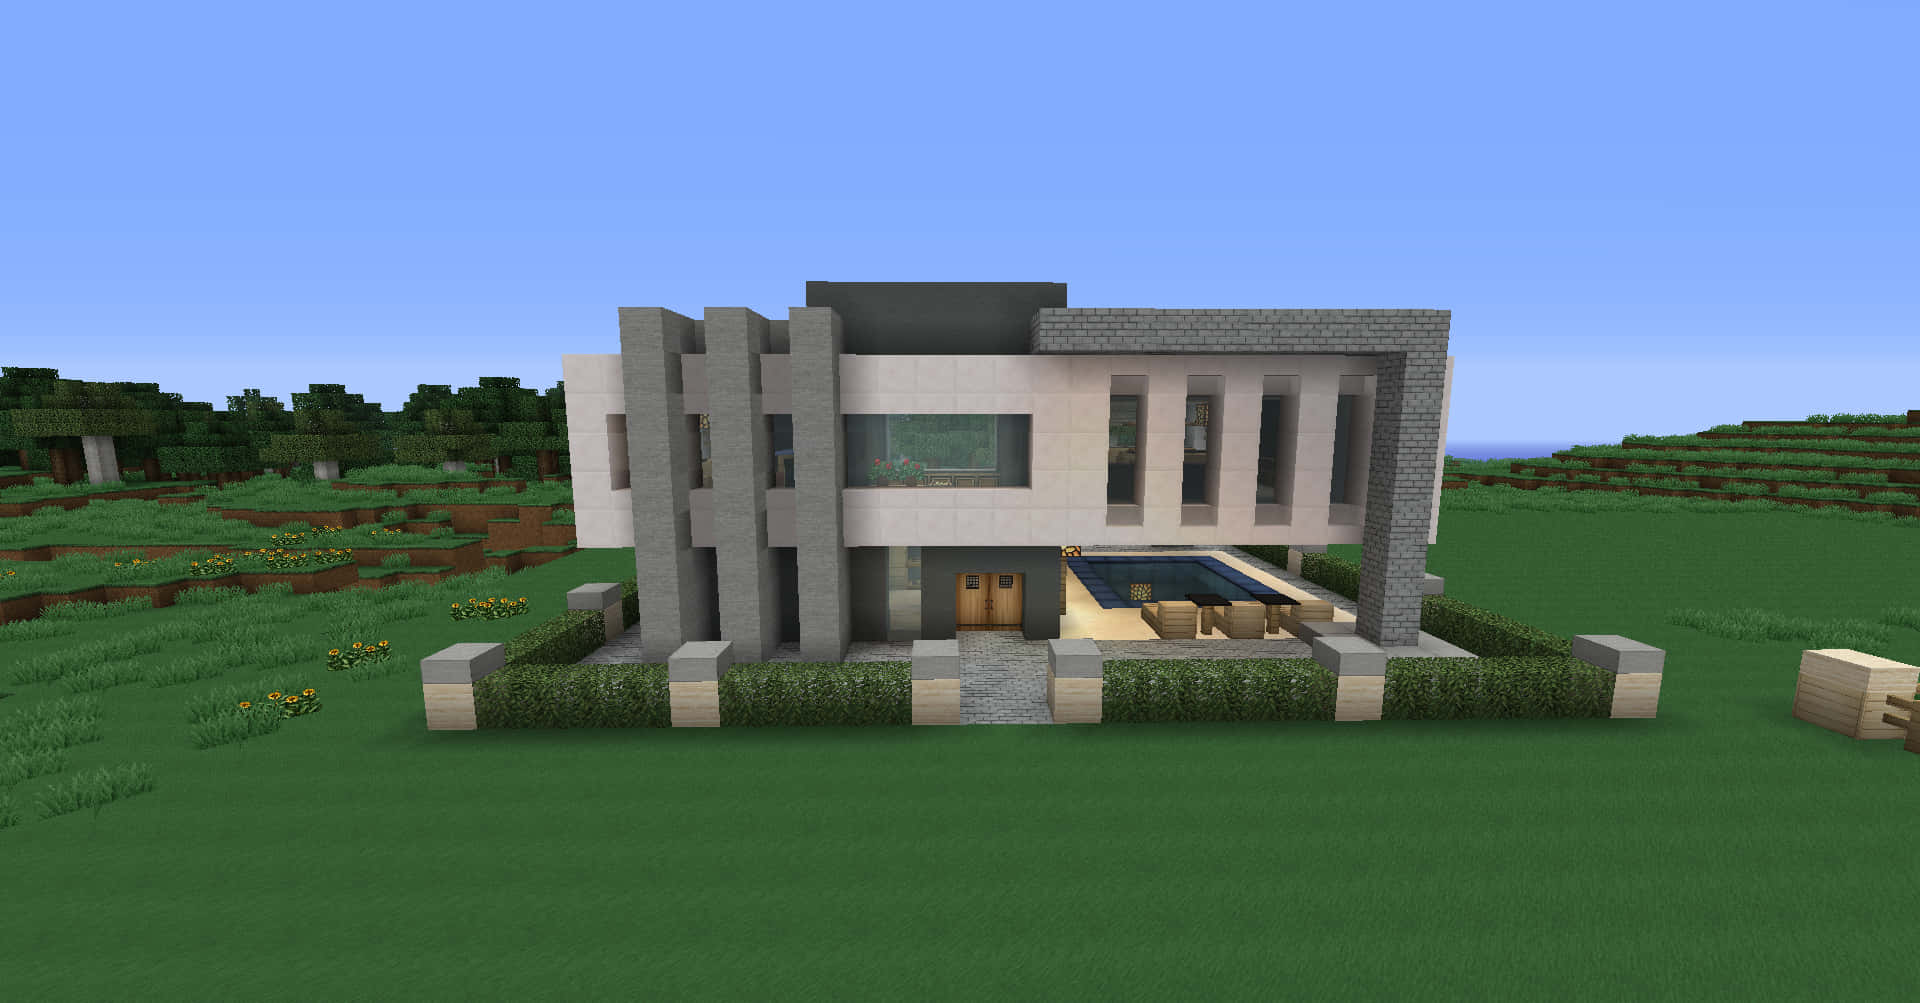 "Explore Magnificent Minecraft Houses!"